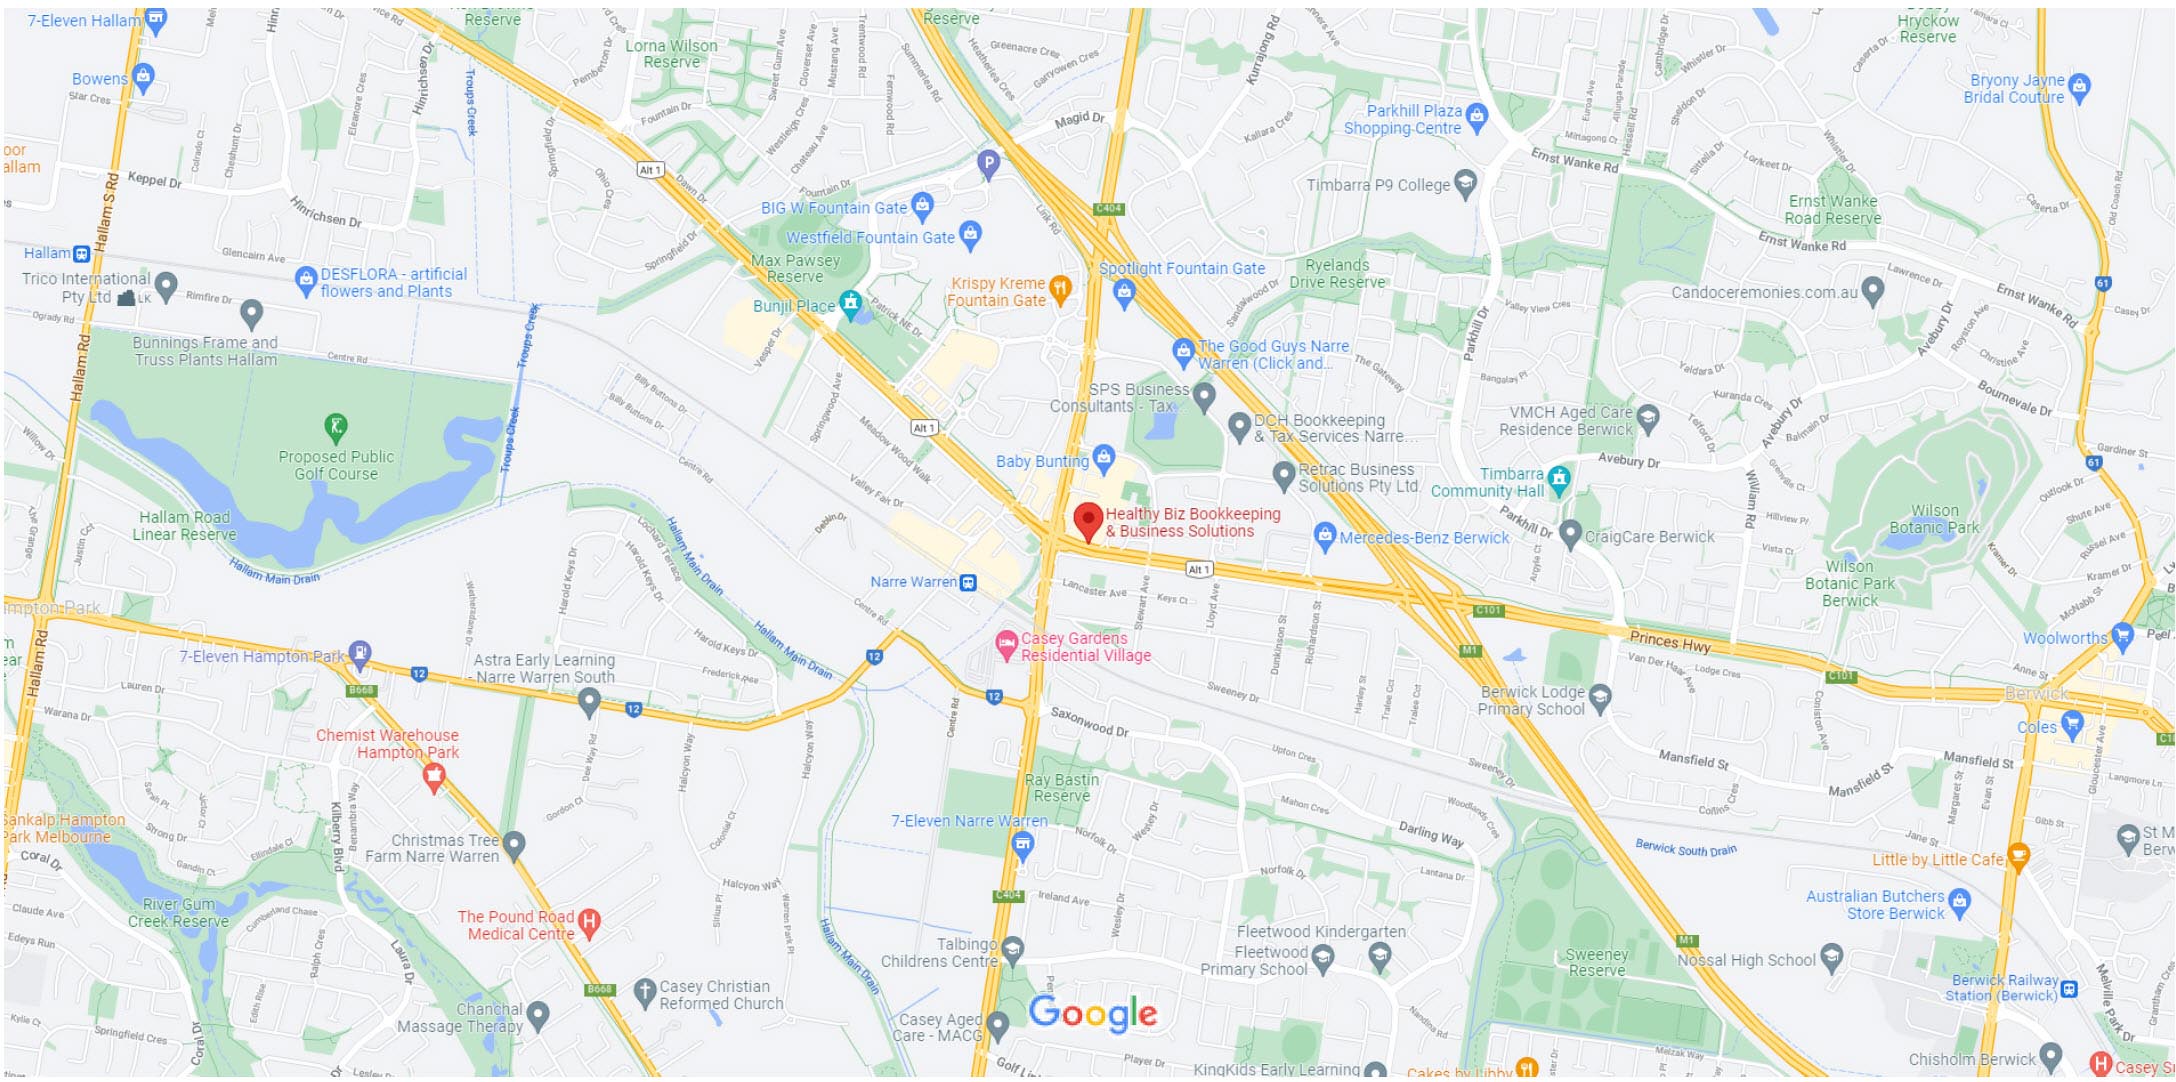 Healthy Biz Bookkeeping & Business Solutions - Google Maps (2)